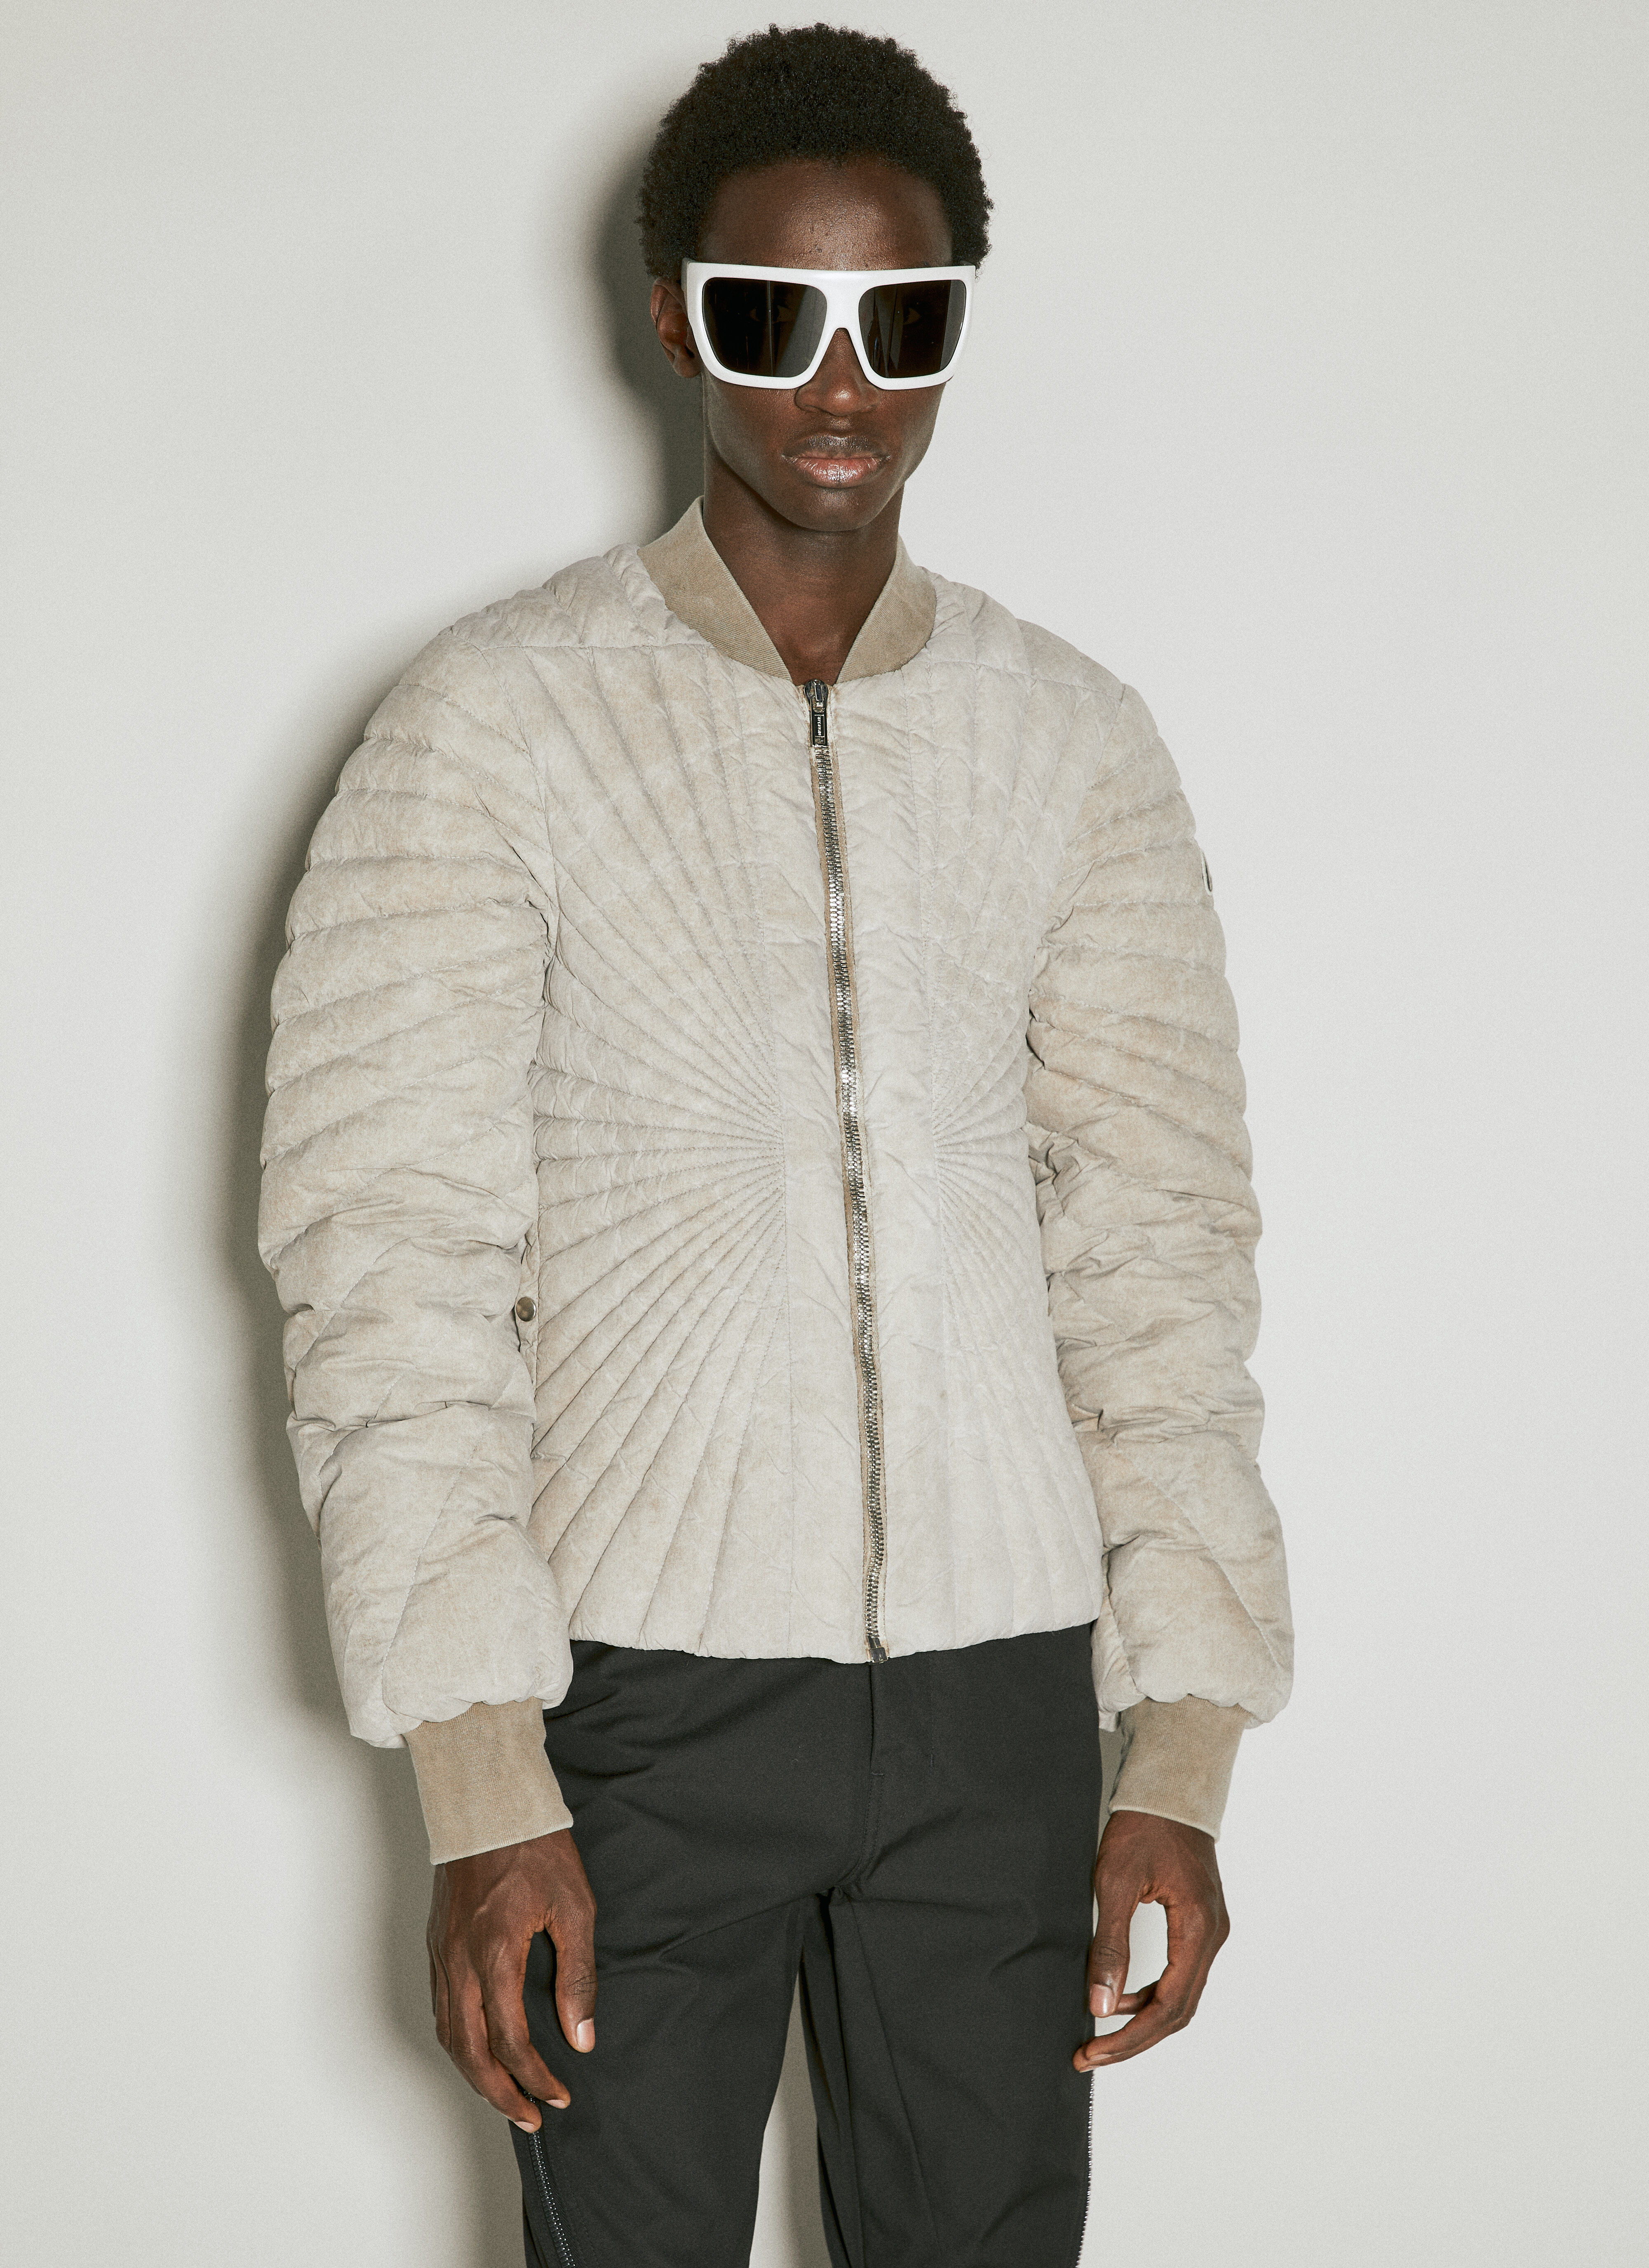 Moncler x Roc Nation designed by Jay-Z 래디언스 다운 플라이트 재킷 블랙 mrn0156002